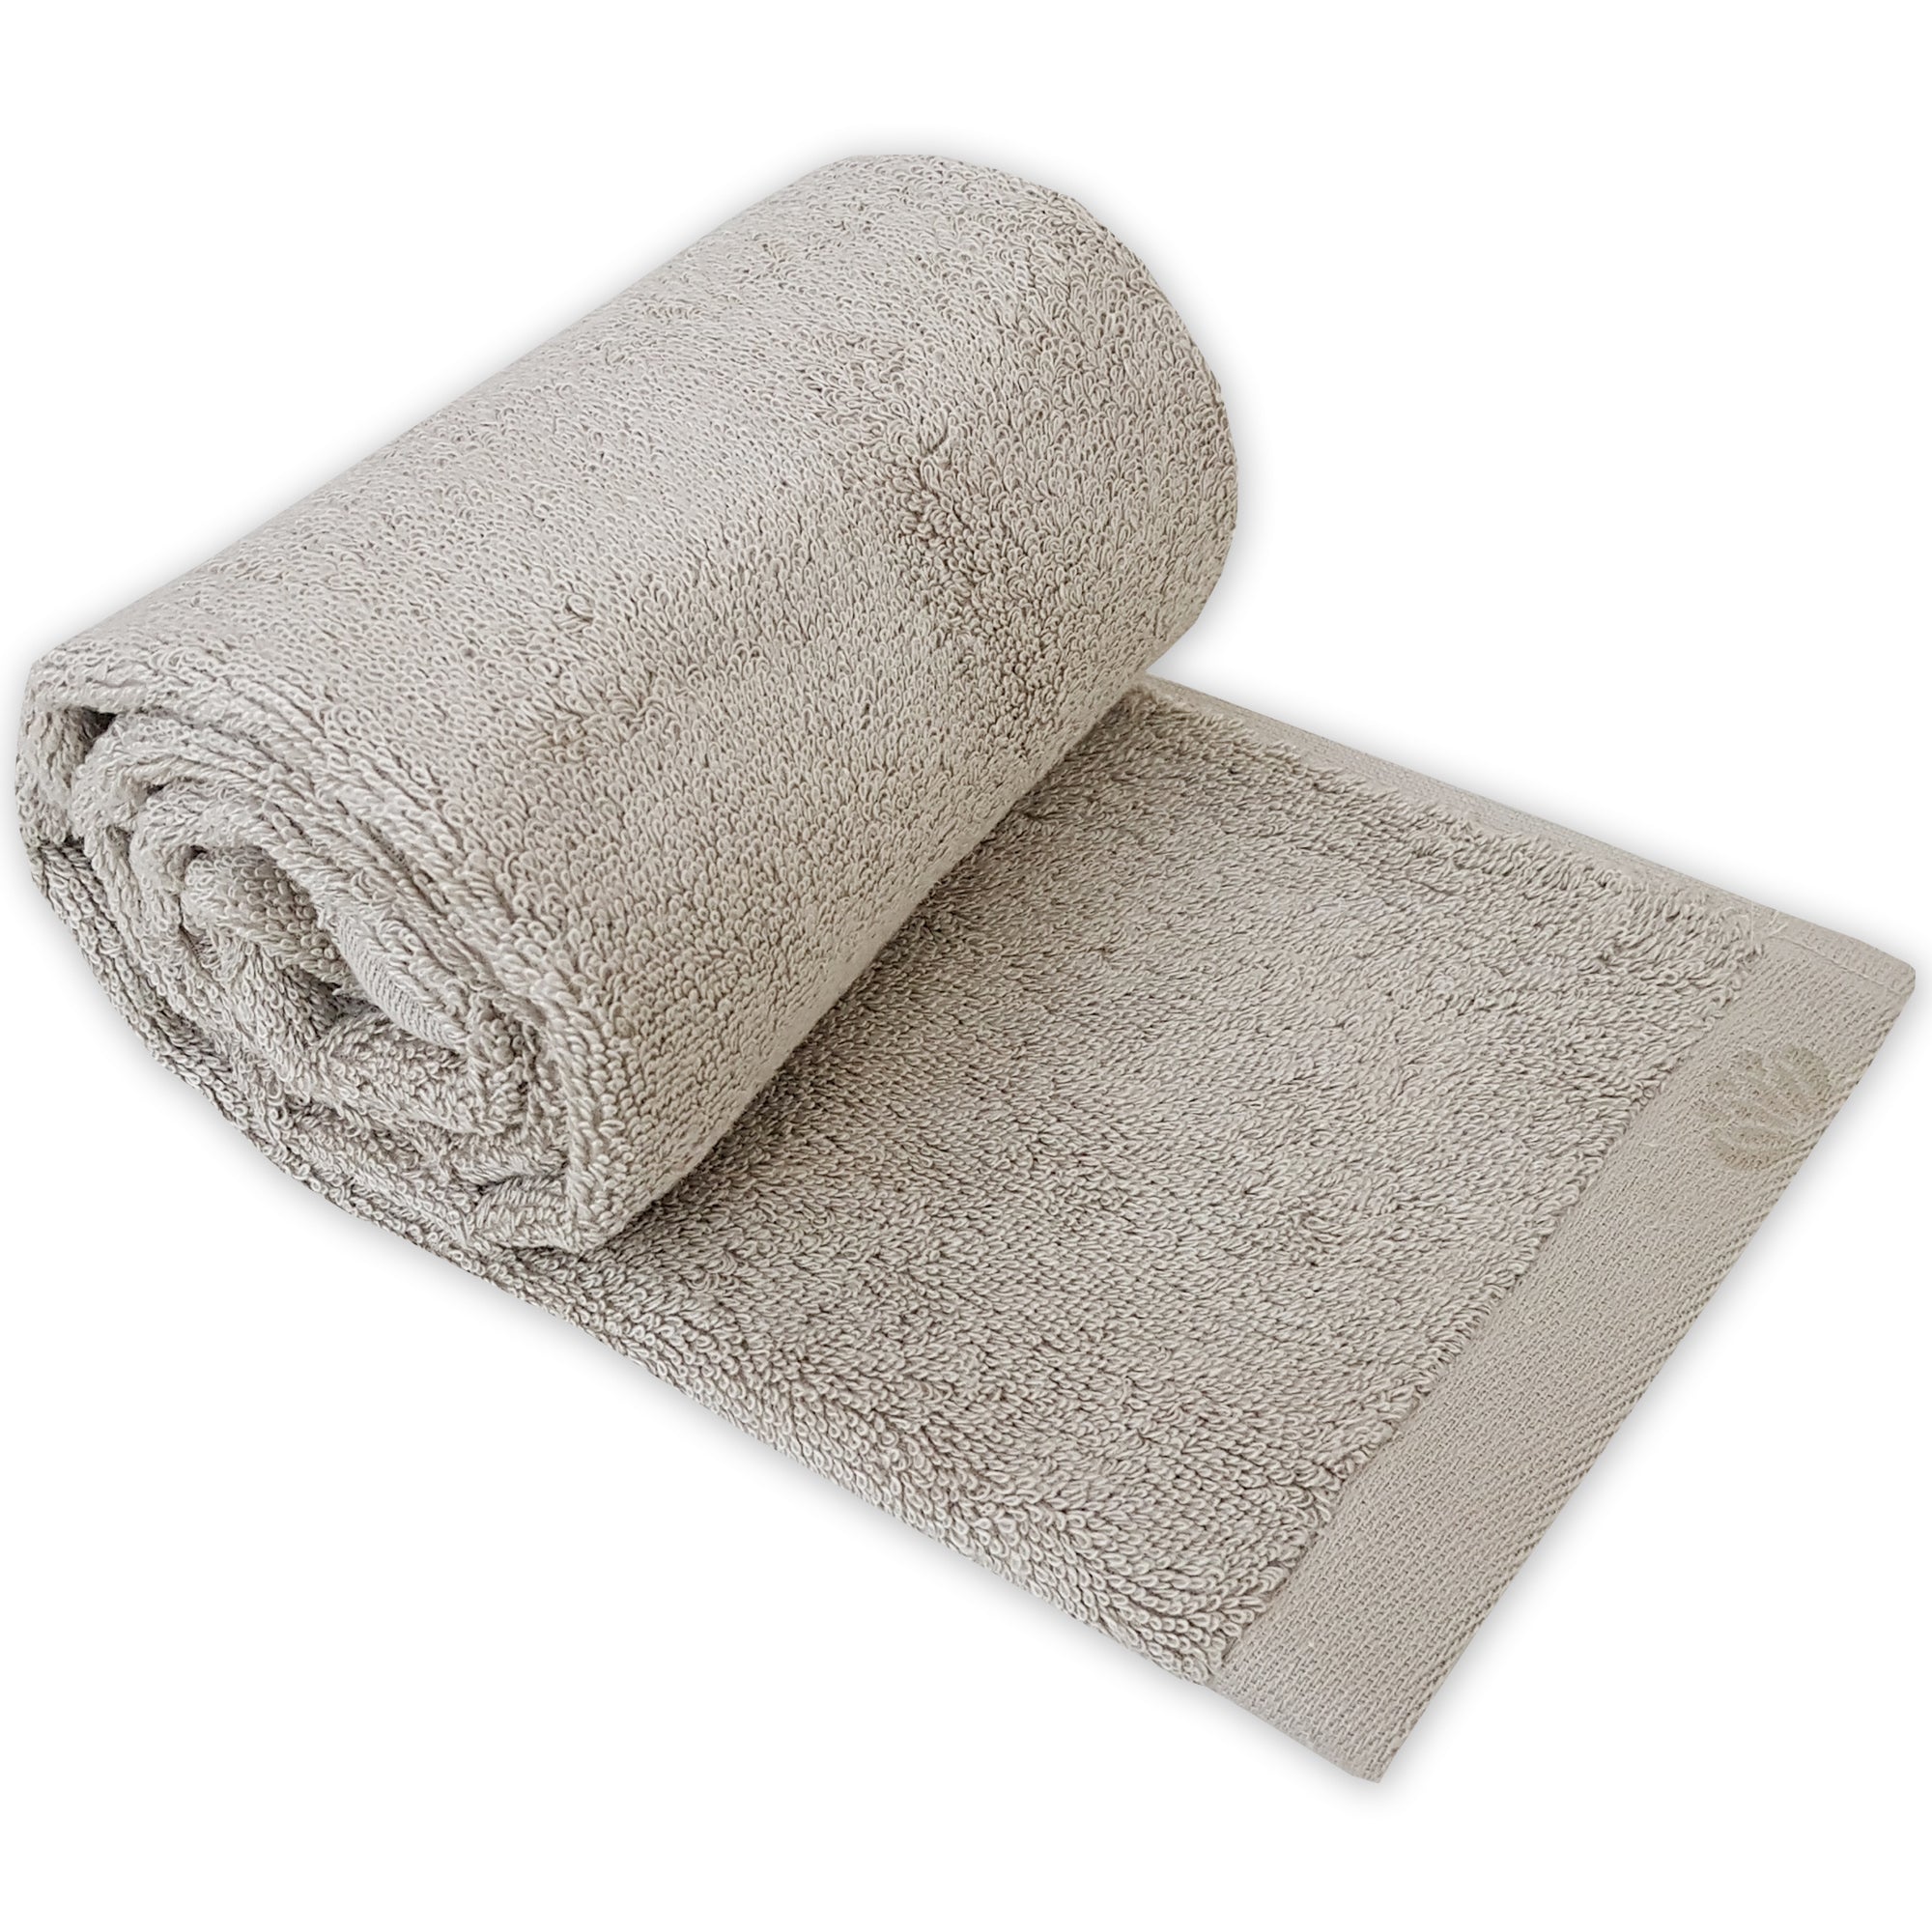 Shower towel "Botanic Deluxe" CO2 neutral beech wood fiber